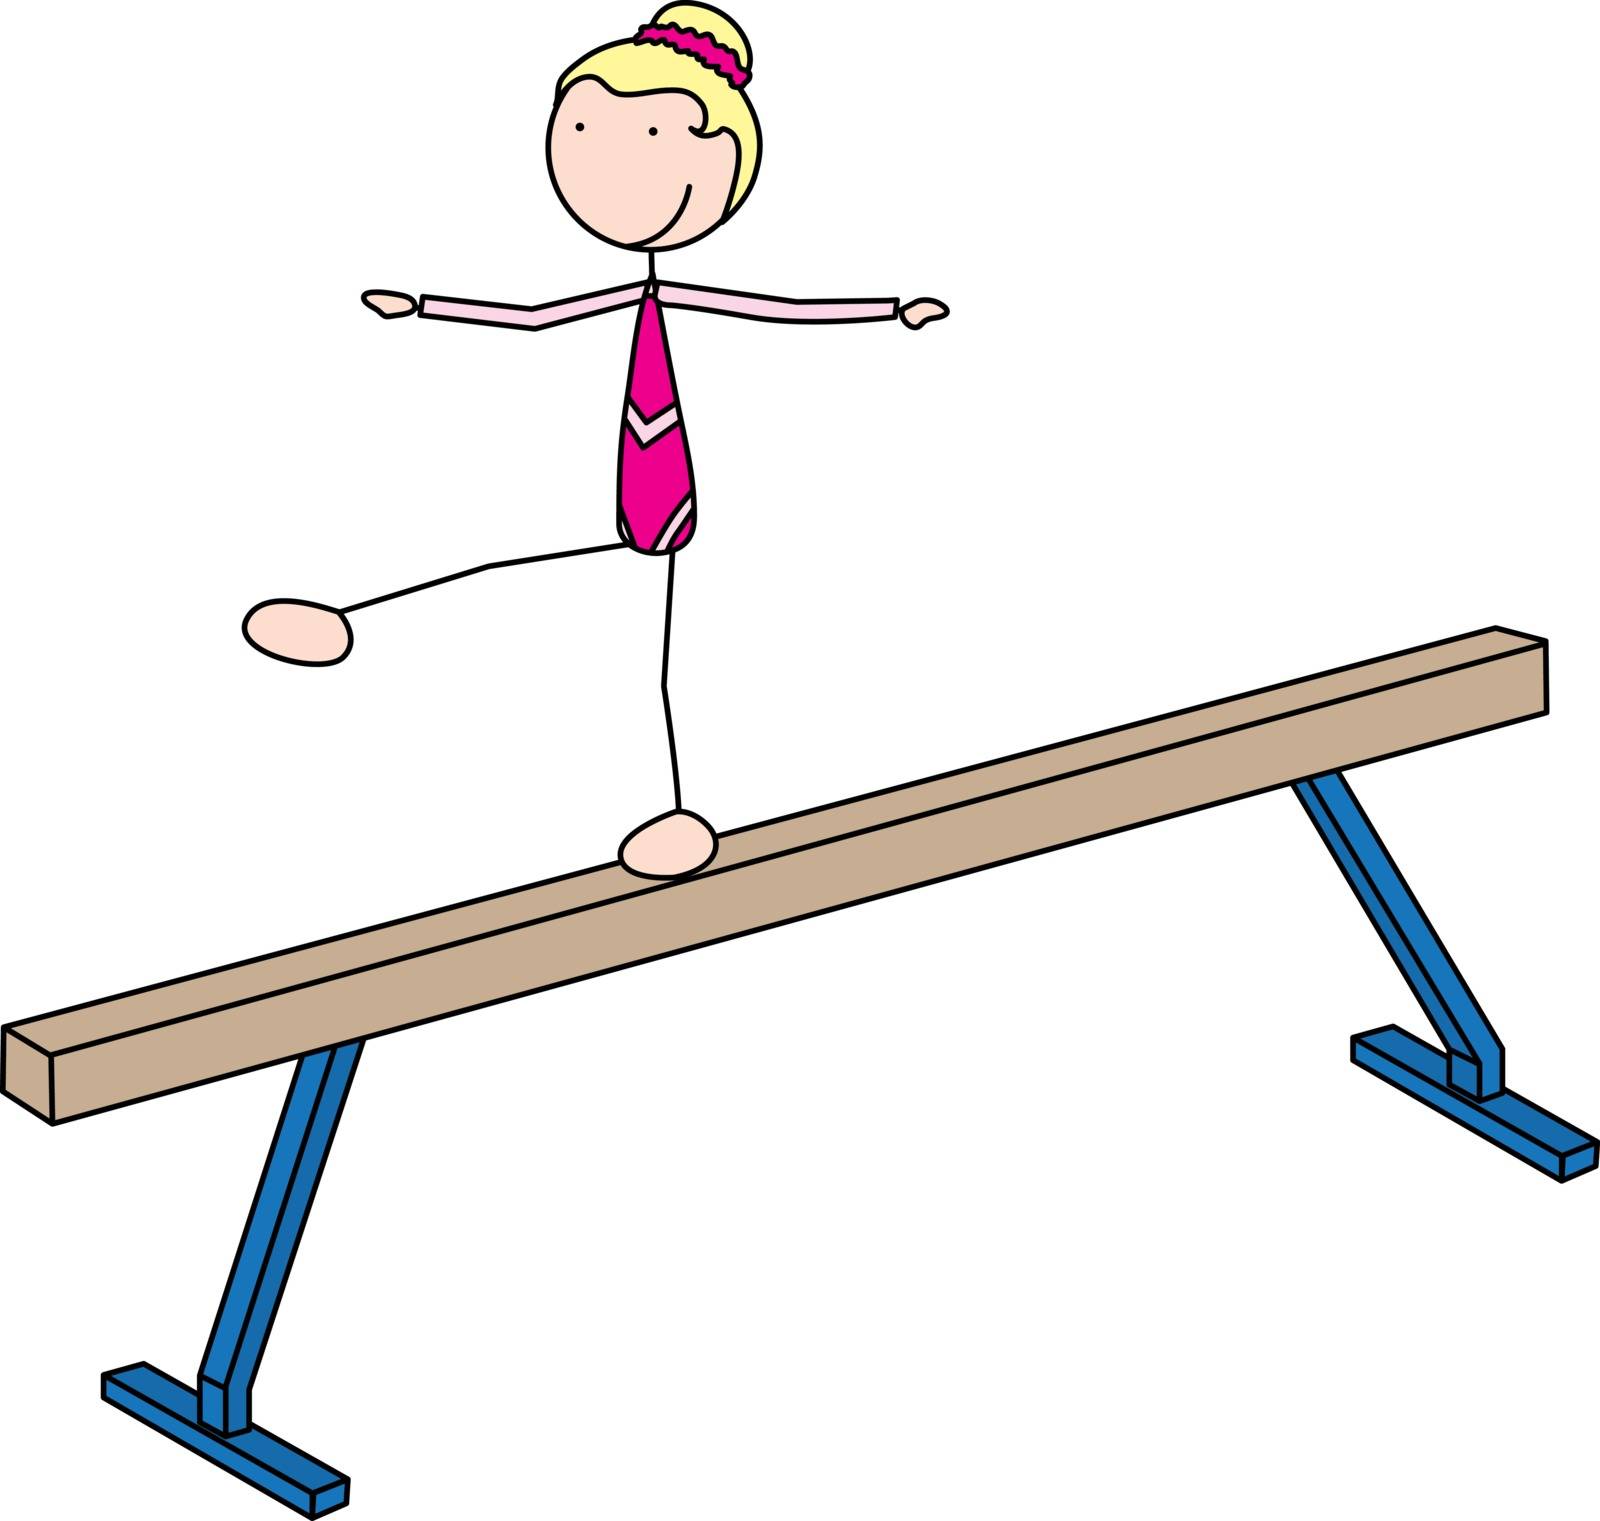 Cartoon illustration of a girl on a balance beam